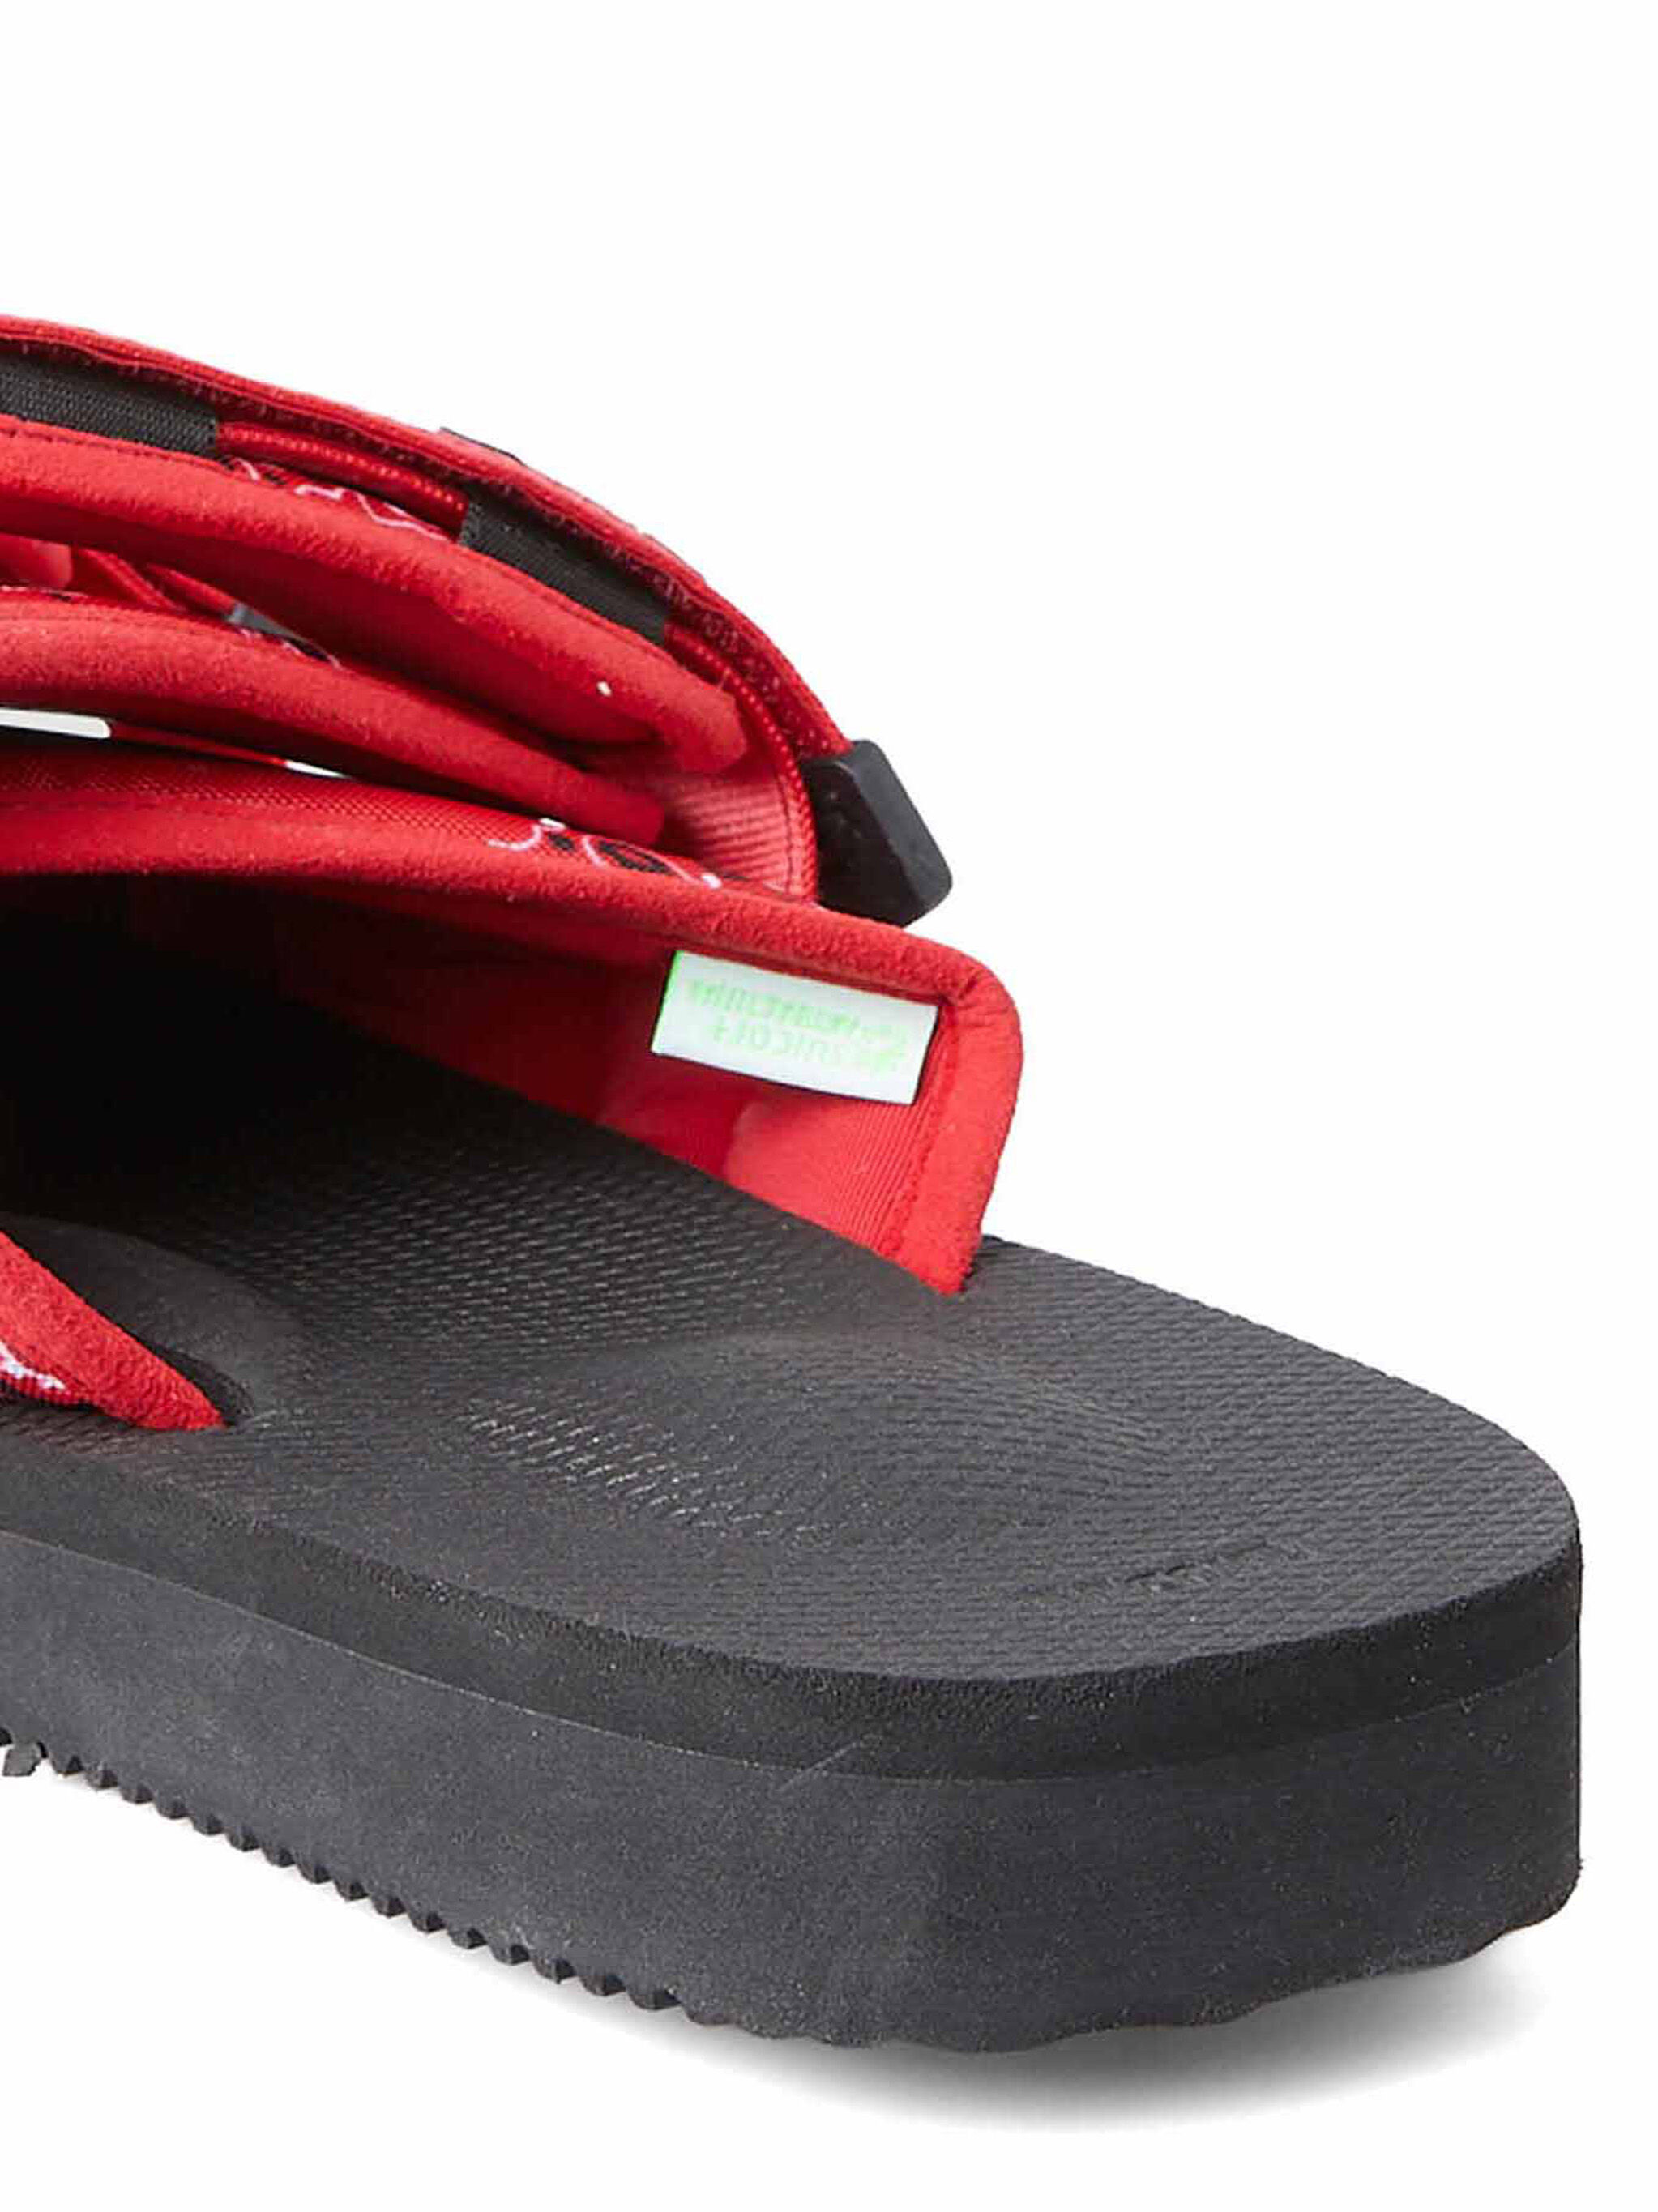 Suicoke Moto-Cab Bandana Red Sandals | THE FLAMEL®